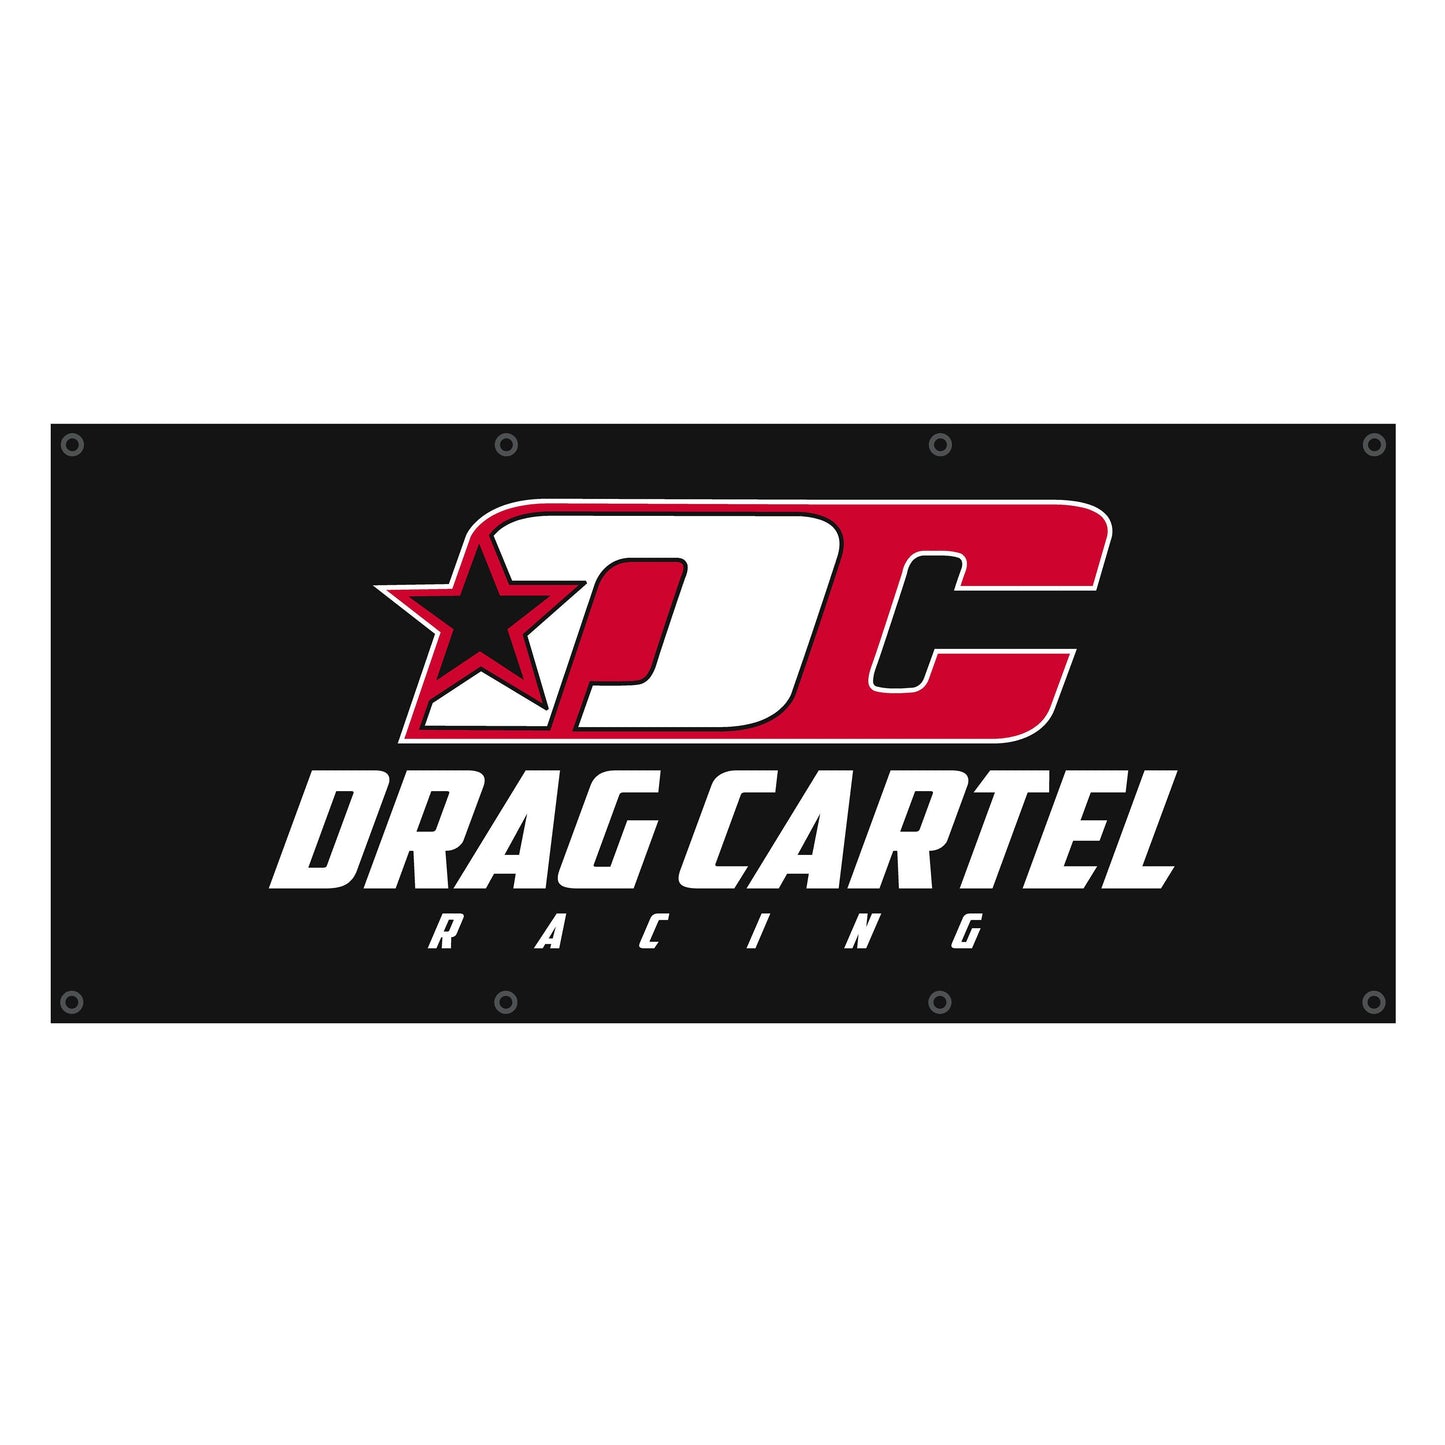 Drag Cartel - Shop Banner 5 x 2